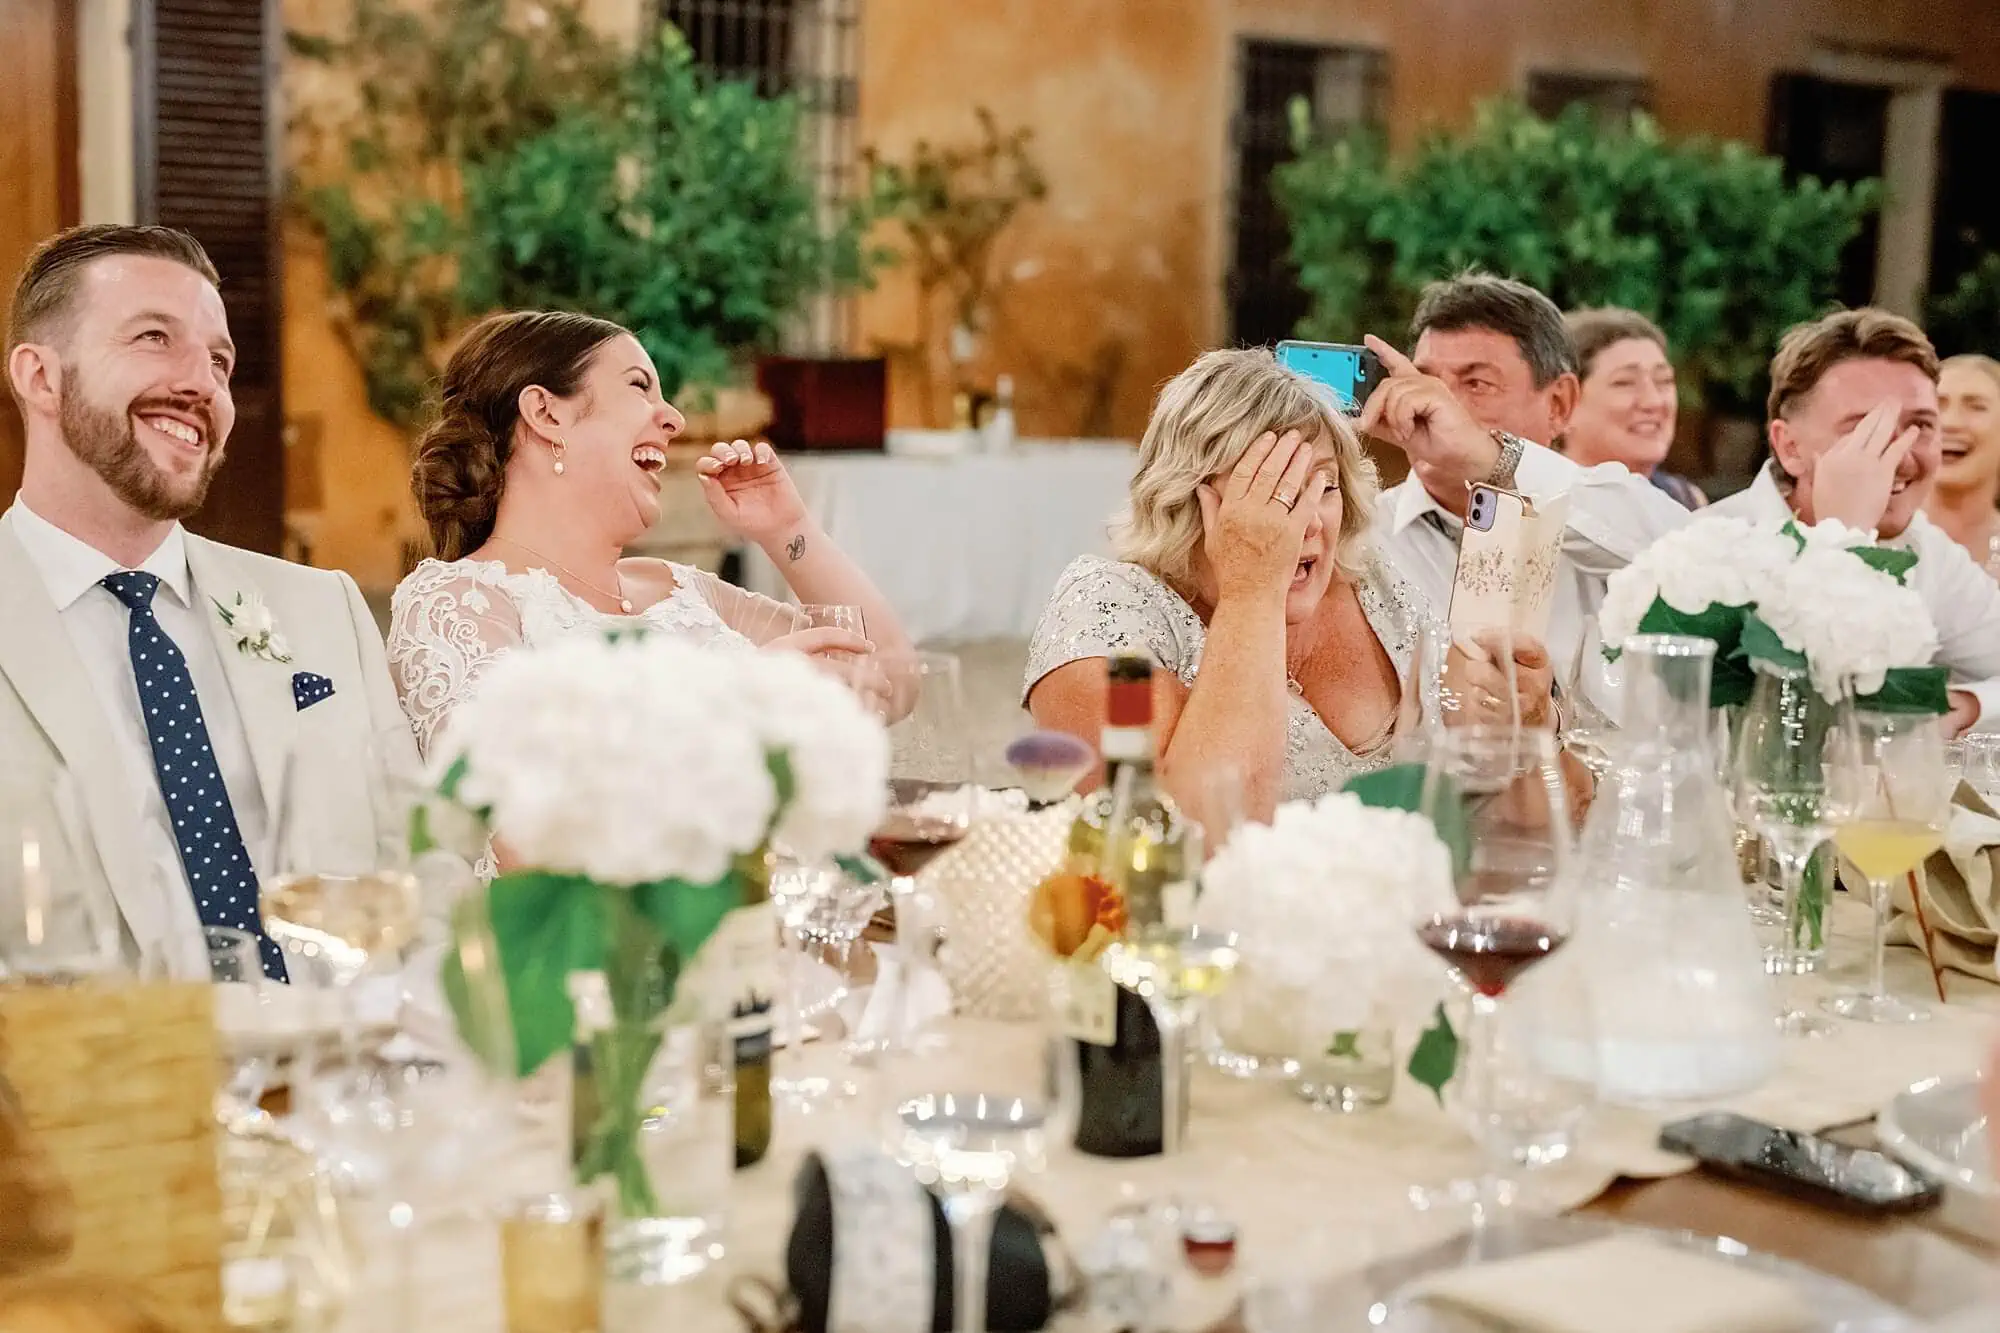 Everyone in hysterics during the Villa Catignano Wedding Speeches